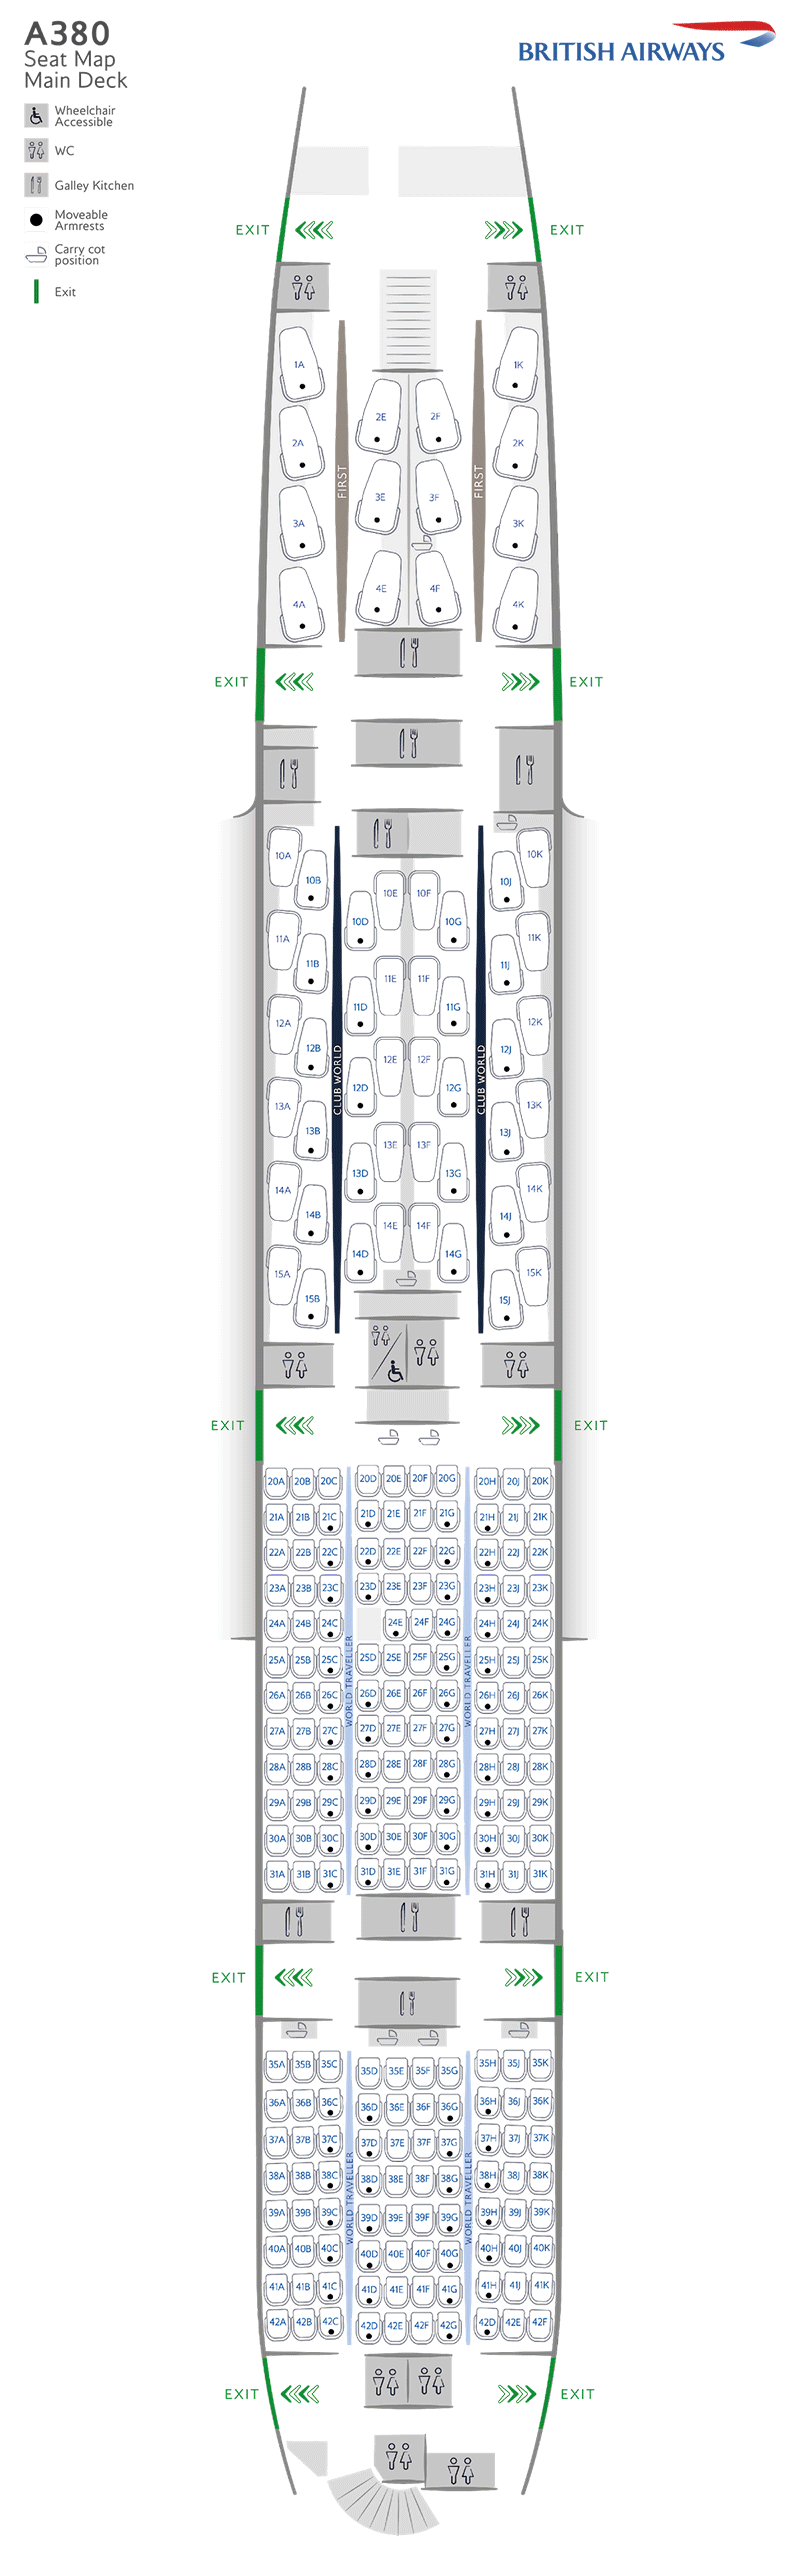 A380-800 main deck seatmap